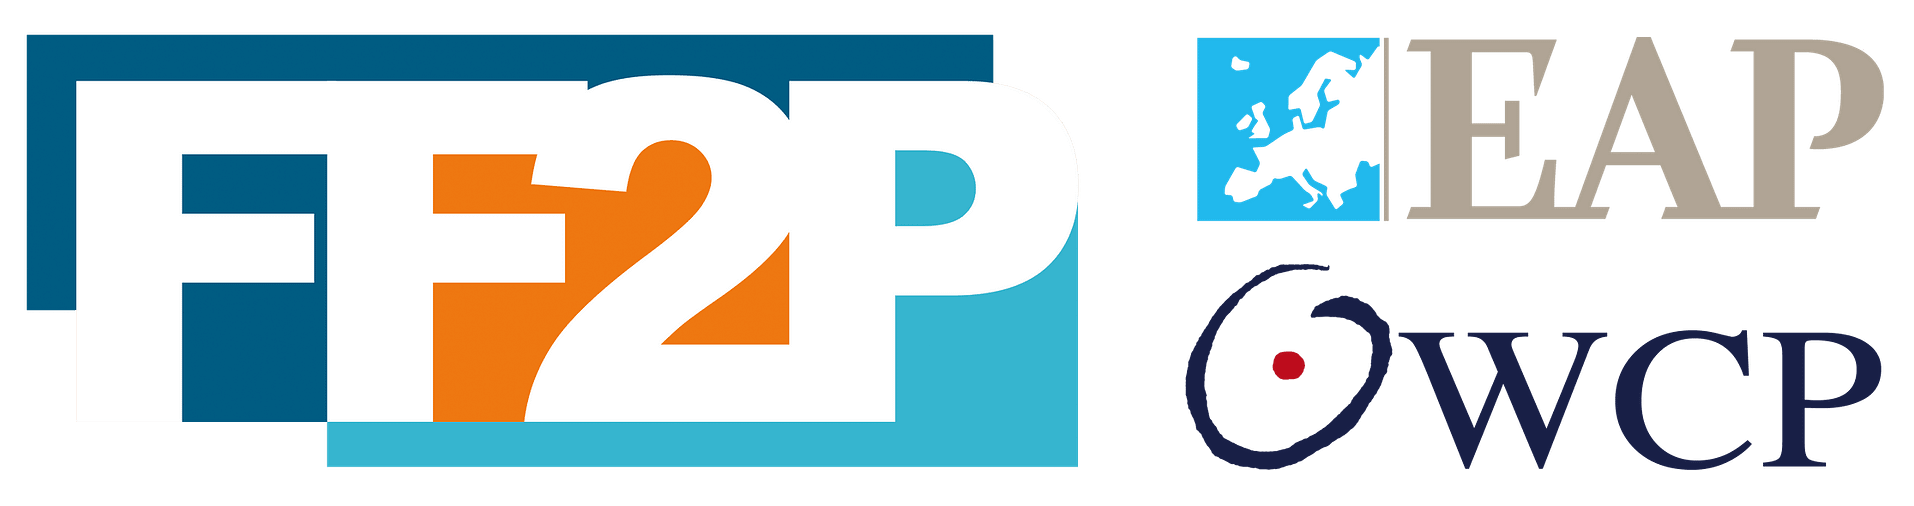 logos ff2p eap wcp5